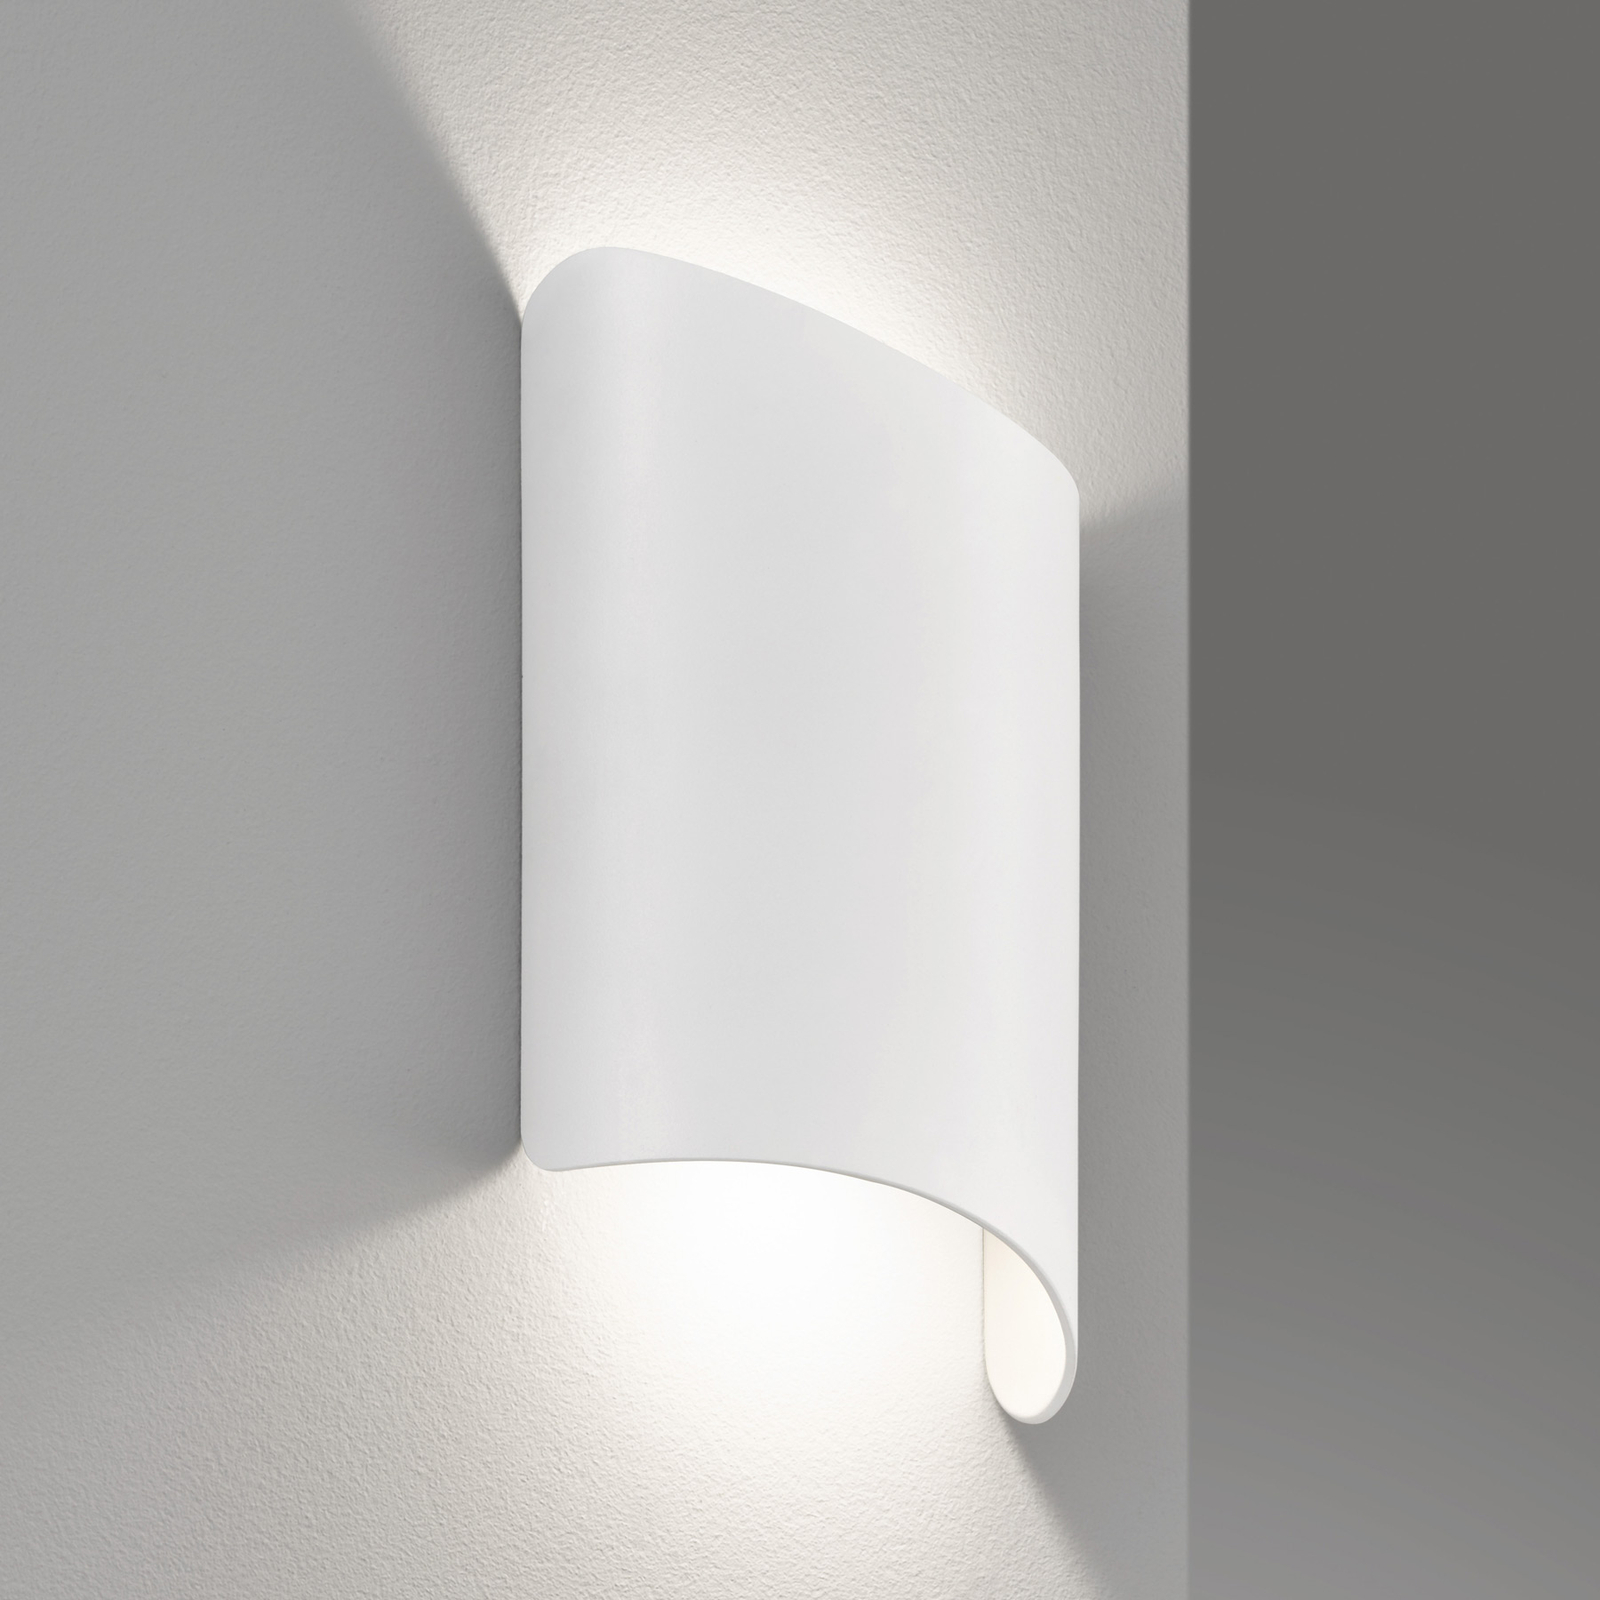 Mara LED wall light, light outlet on both sides